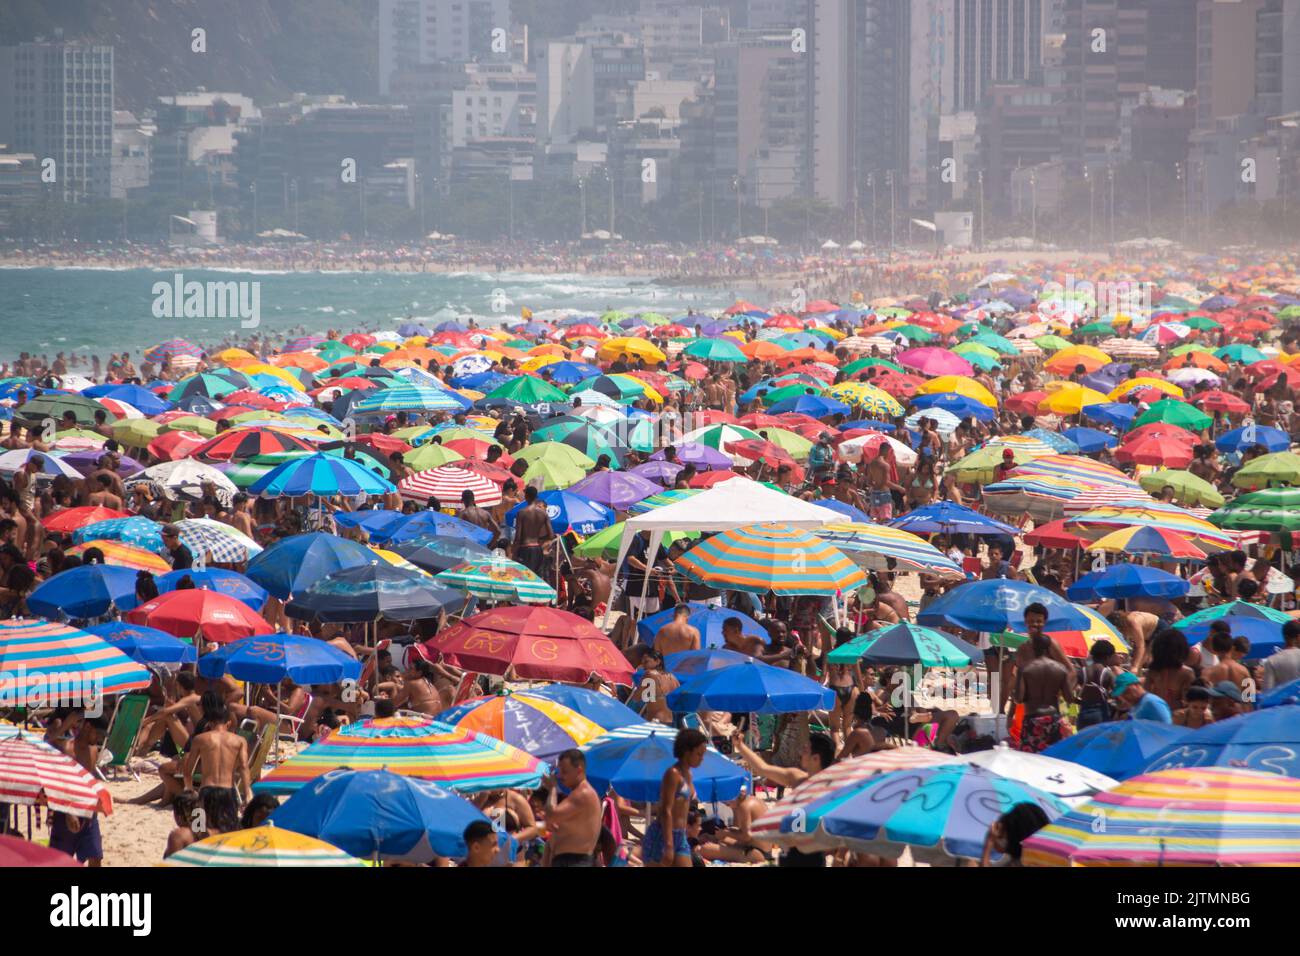 Ipanema-Strand während der Coronavirus-Pandemie in Rio de Janeiro, Brasilien - 6. September 2020: Menschen am Ipanema-Strand während des Coronavirus pande Stockfoto